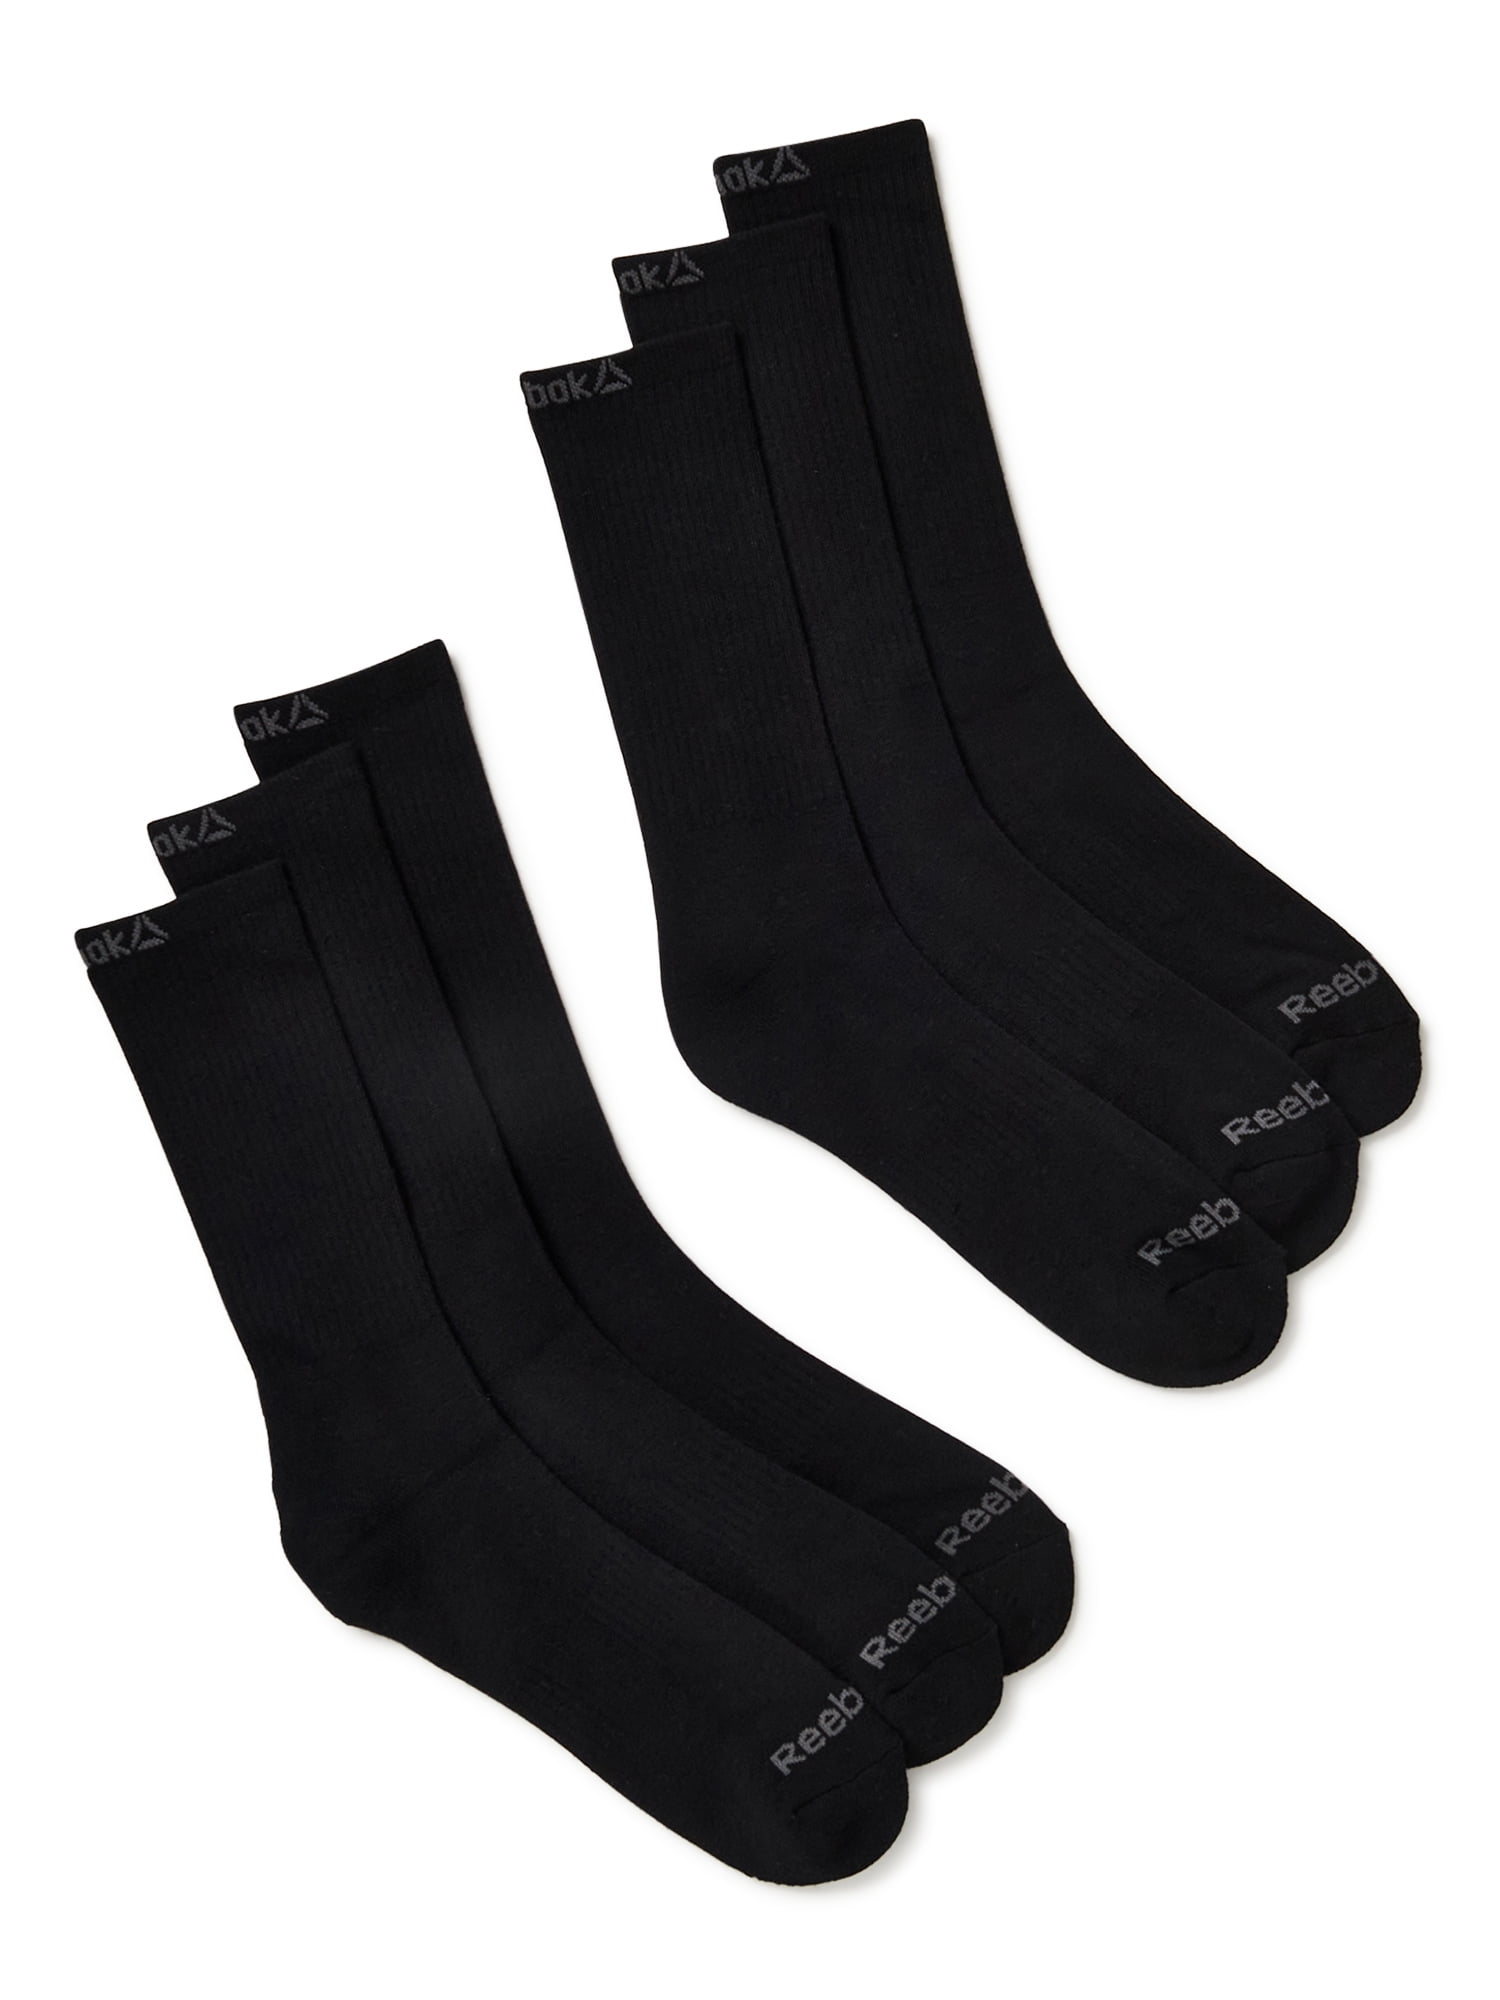 Reebok - Reebok Men's Pro Series Crew Socks, 6-Pack - Walmart.com ...